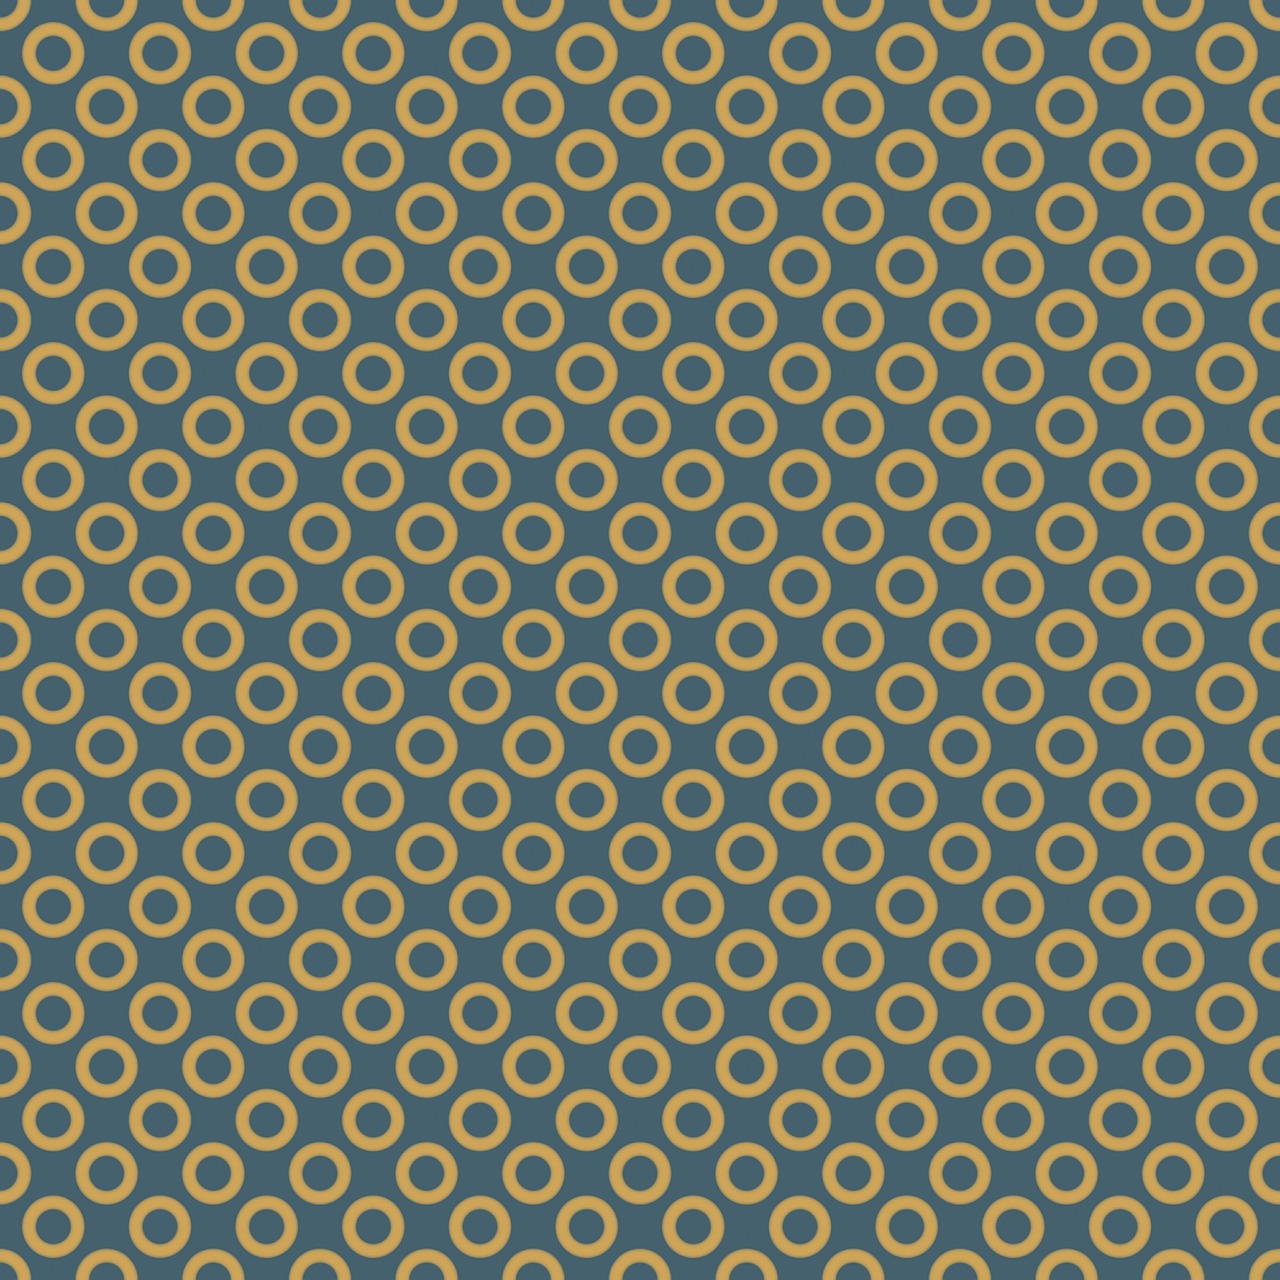 polka dots pattern polka free photo